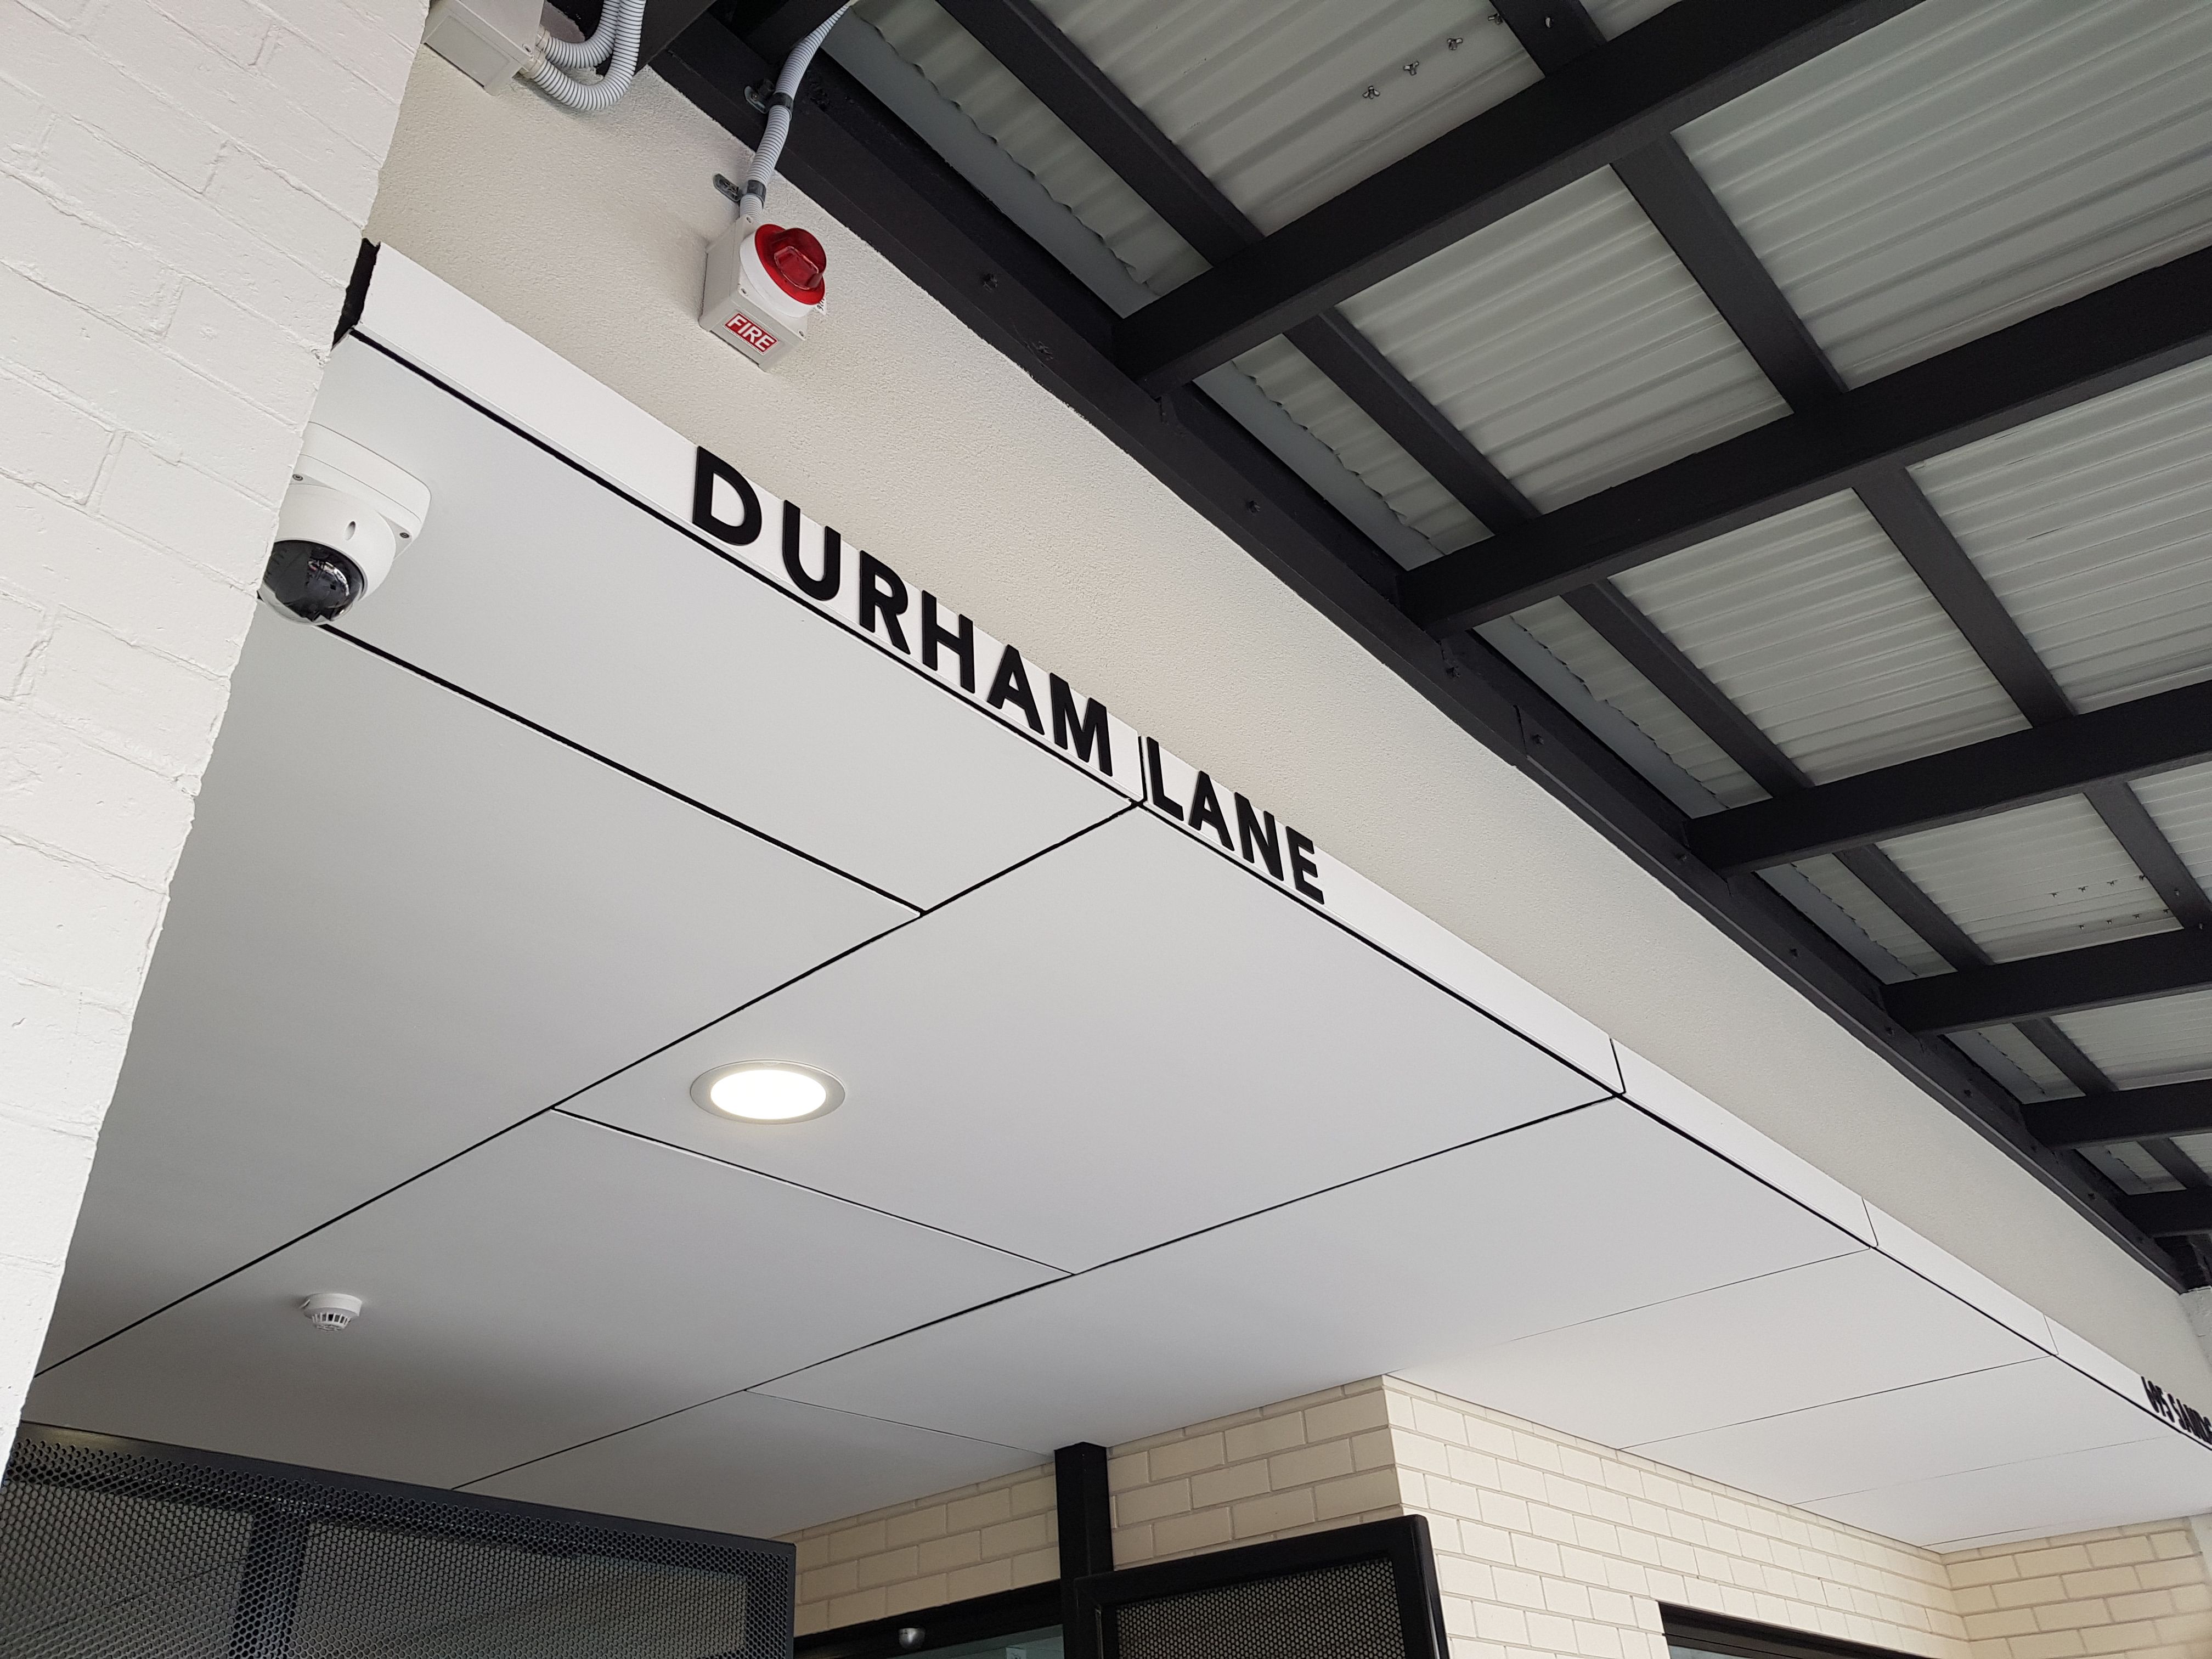 Durham Lane